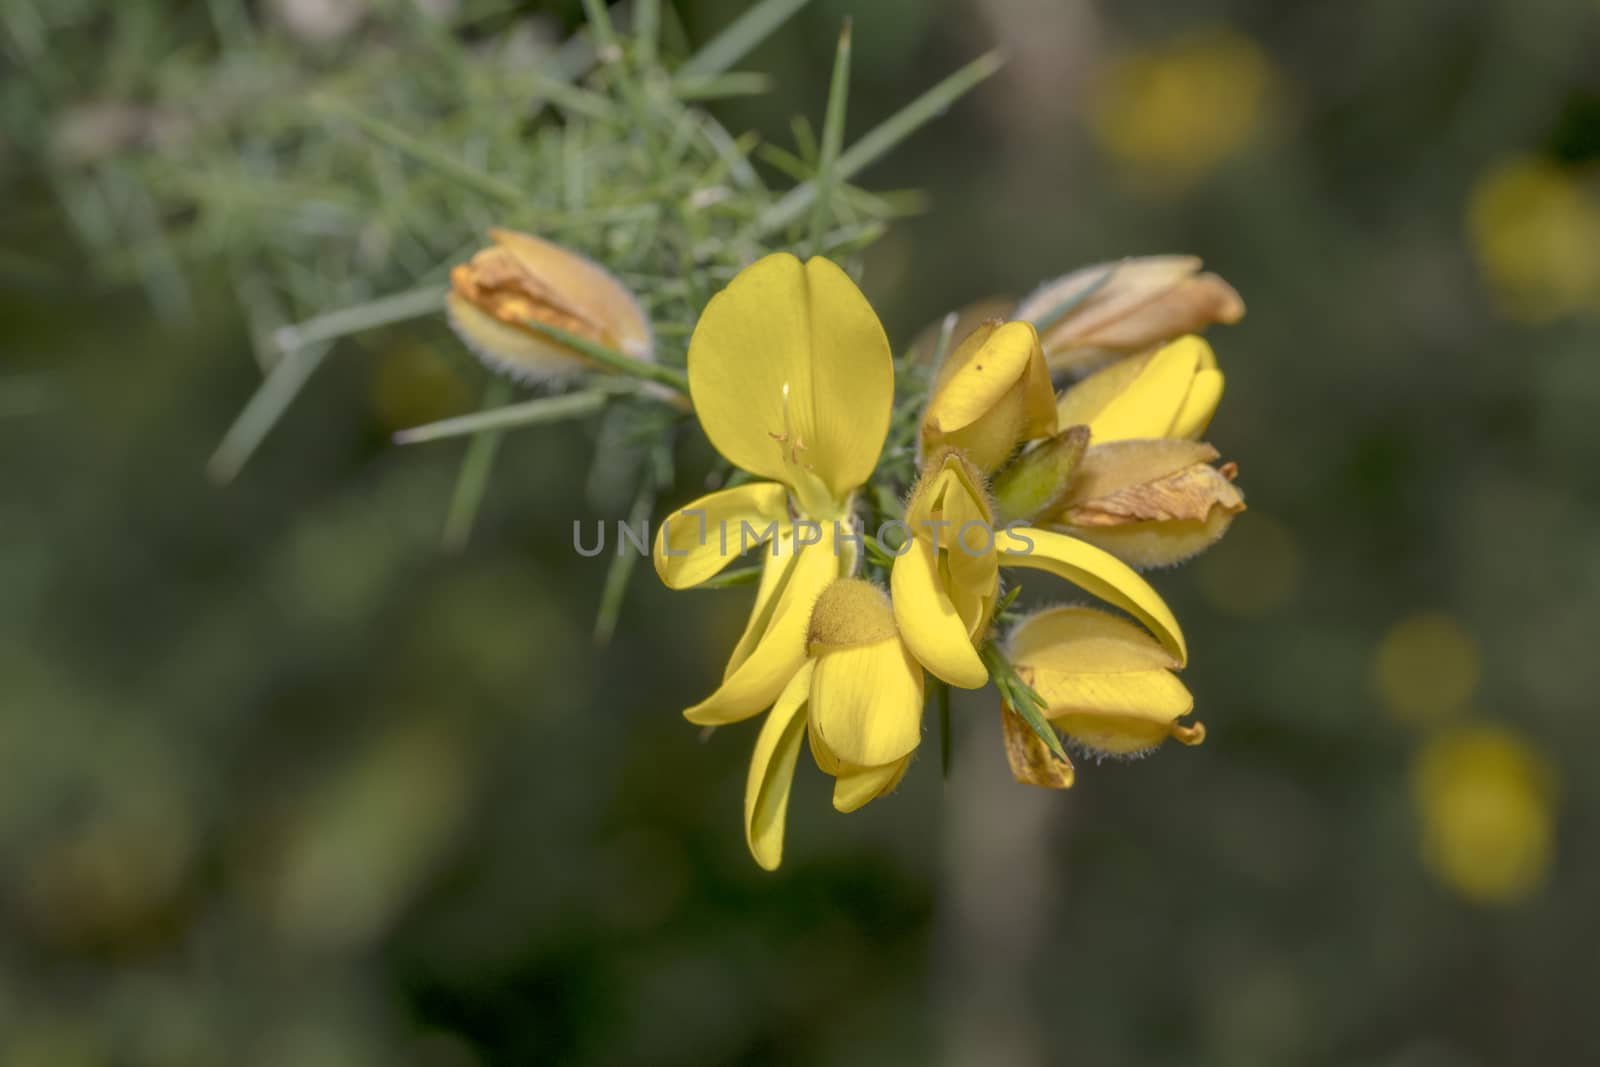 Ulex europaeus, yellow flowers close up by ankorlight